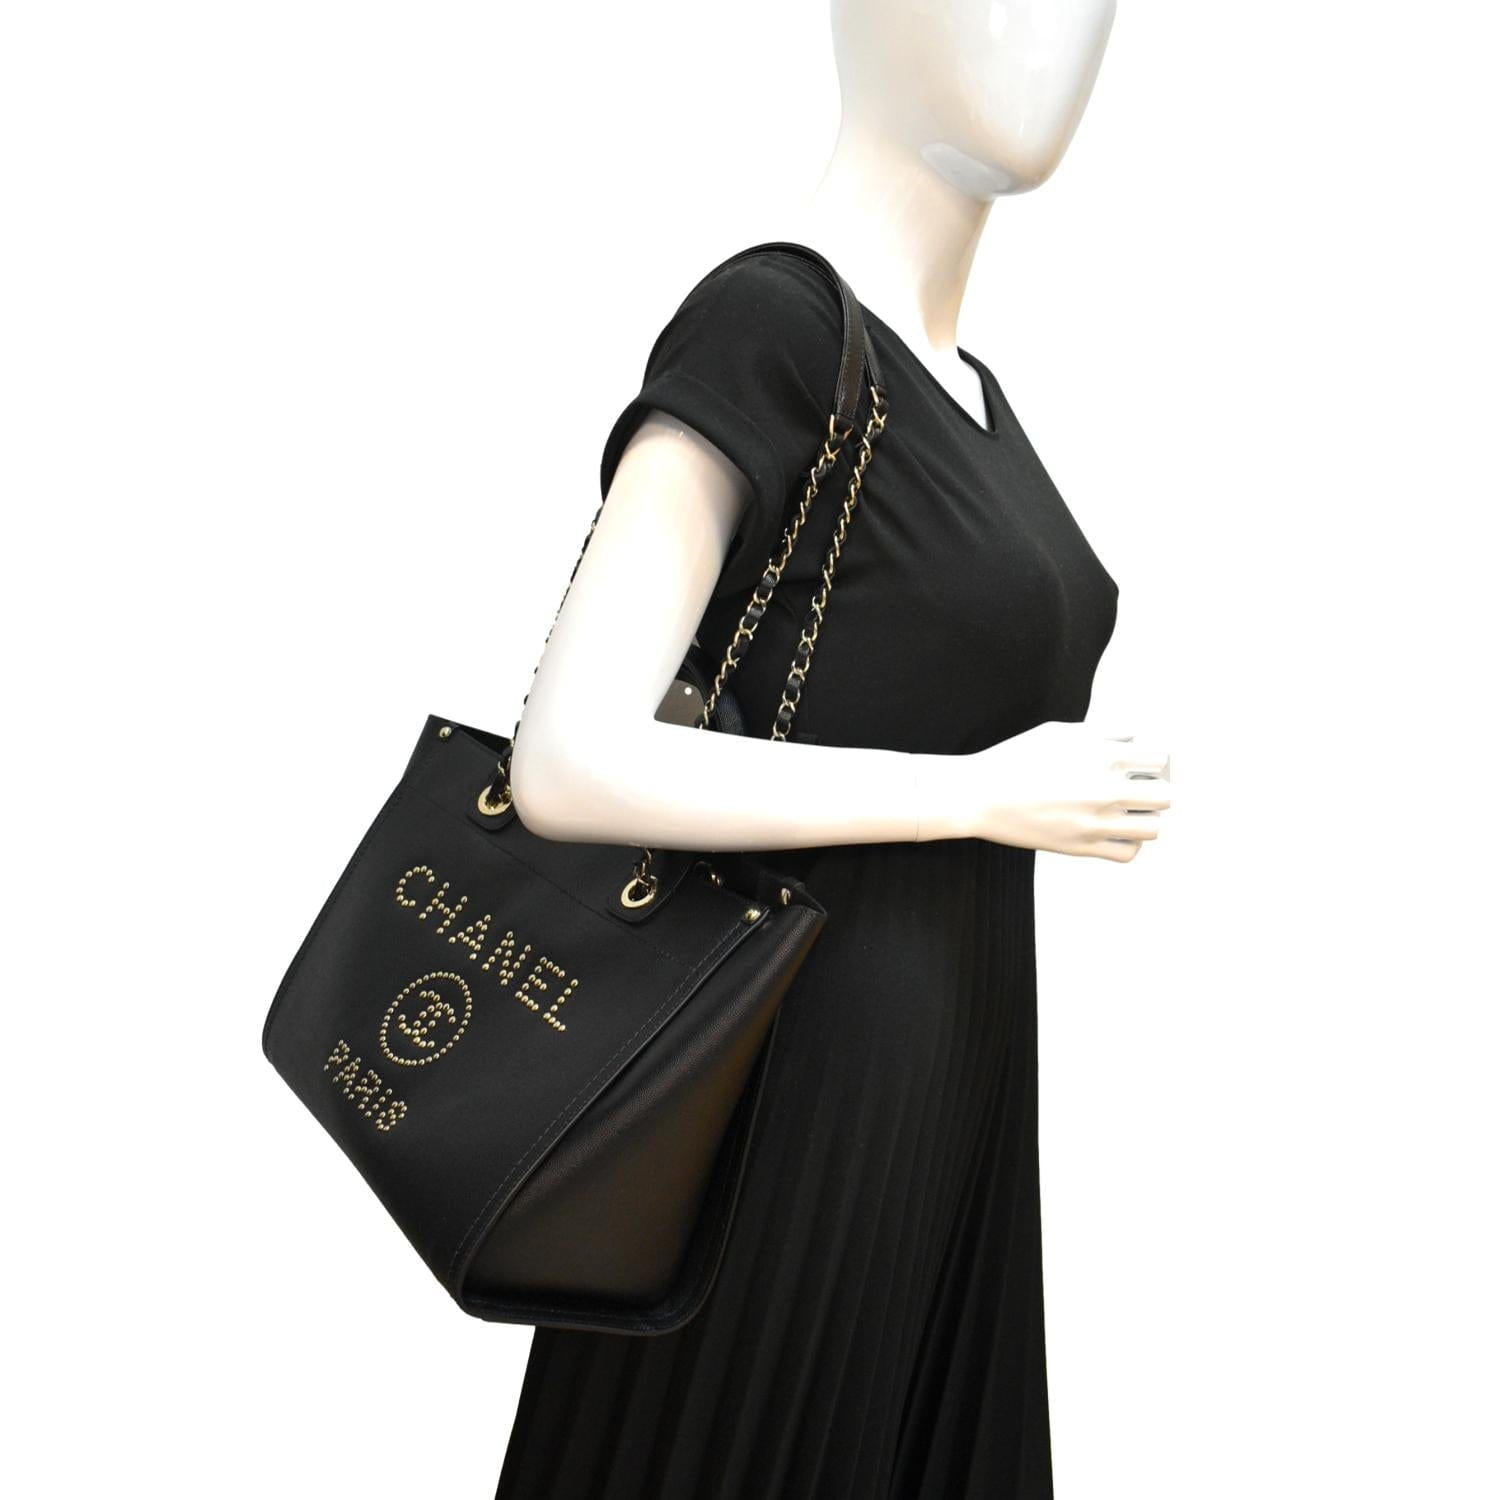 Chanel Medium Studded Deauville Tote Black Caviar Gold Hardware – Coco  Approved Studio